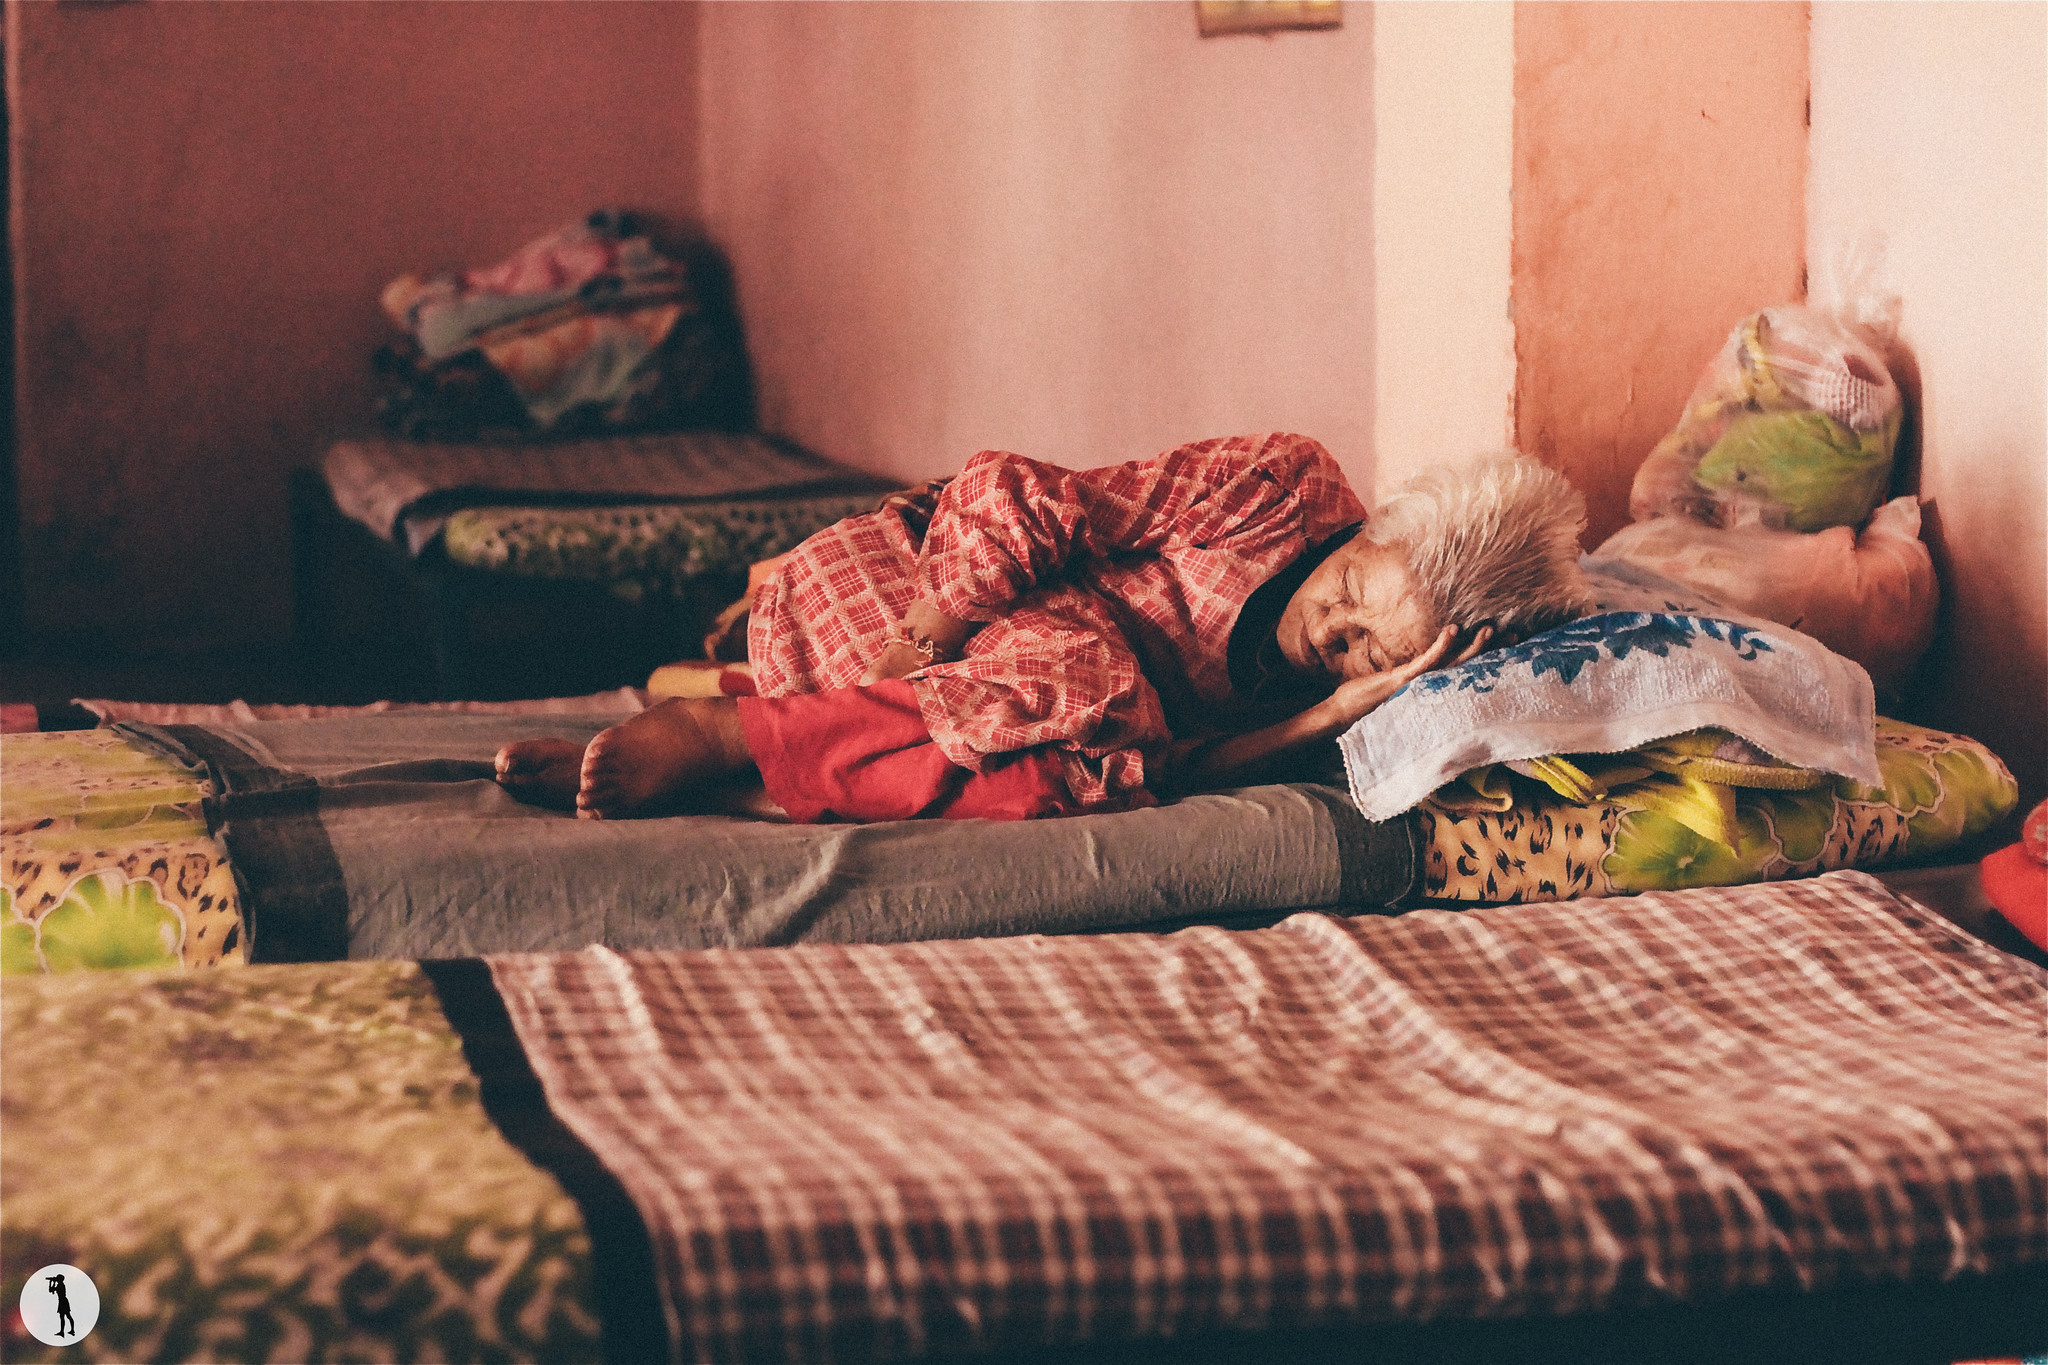 Elderly's home, Nepal.